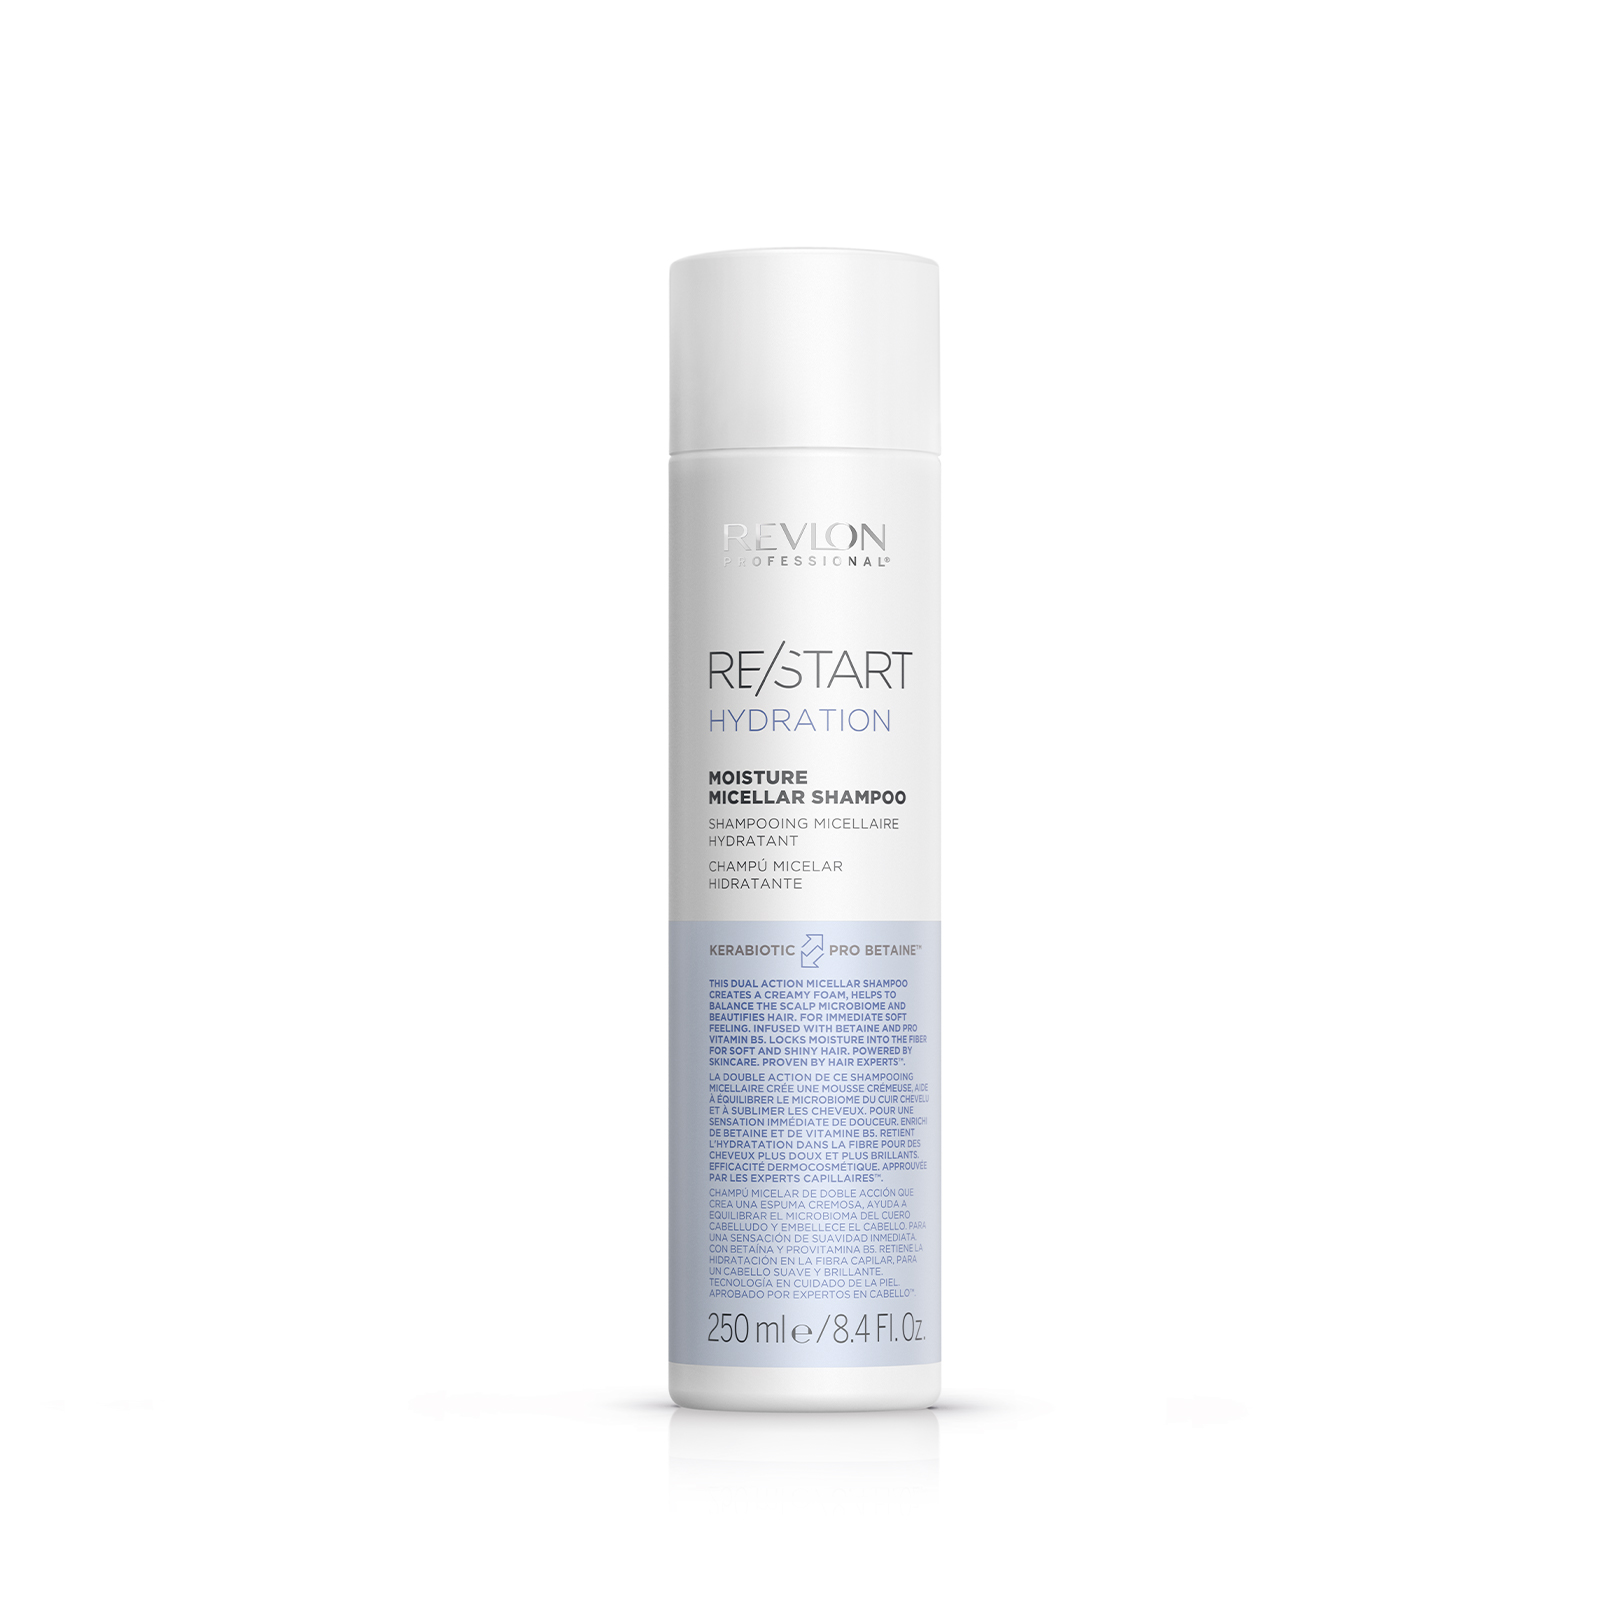 RE/START™ Hydration - Revlon Moisture Shampoo Micellar Professional